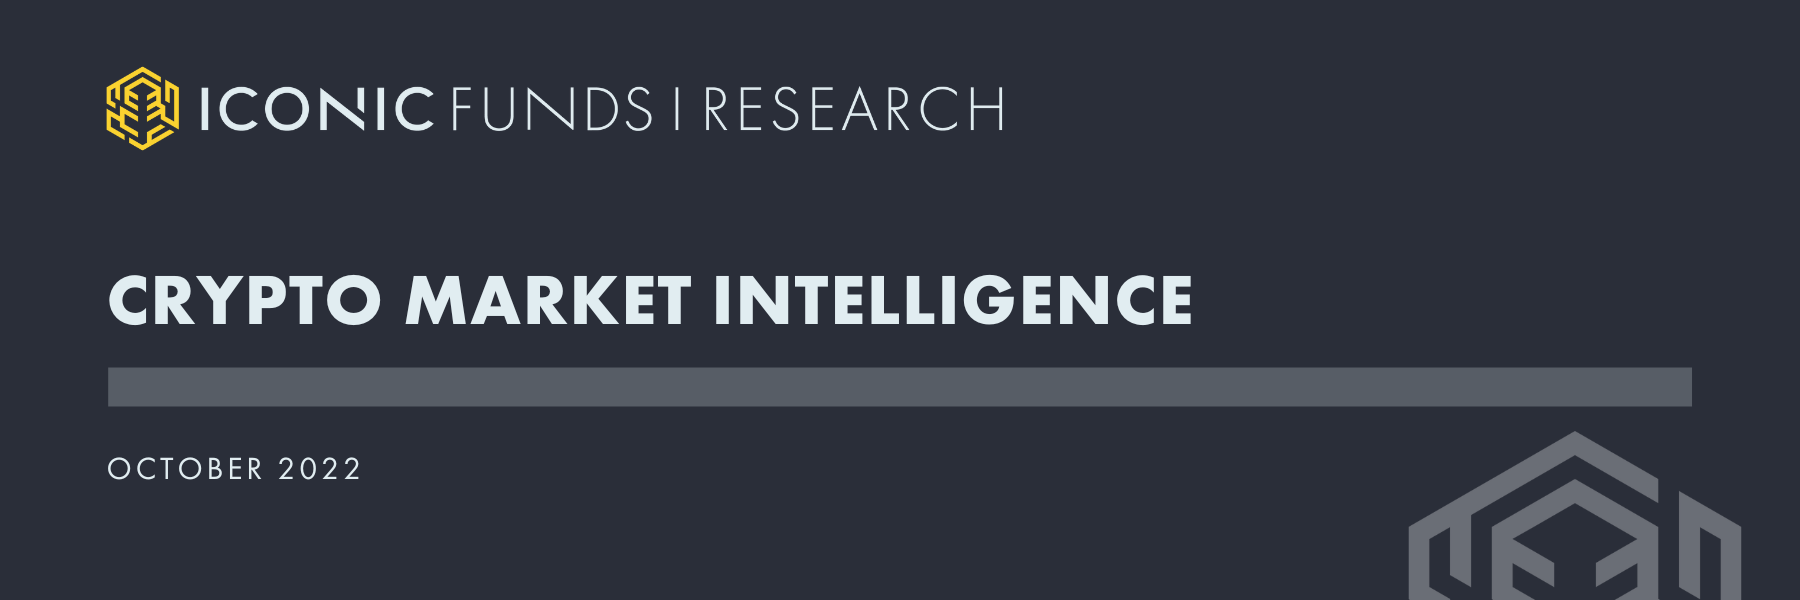 Crypto Market Intelligence October 2022